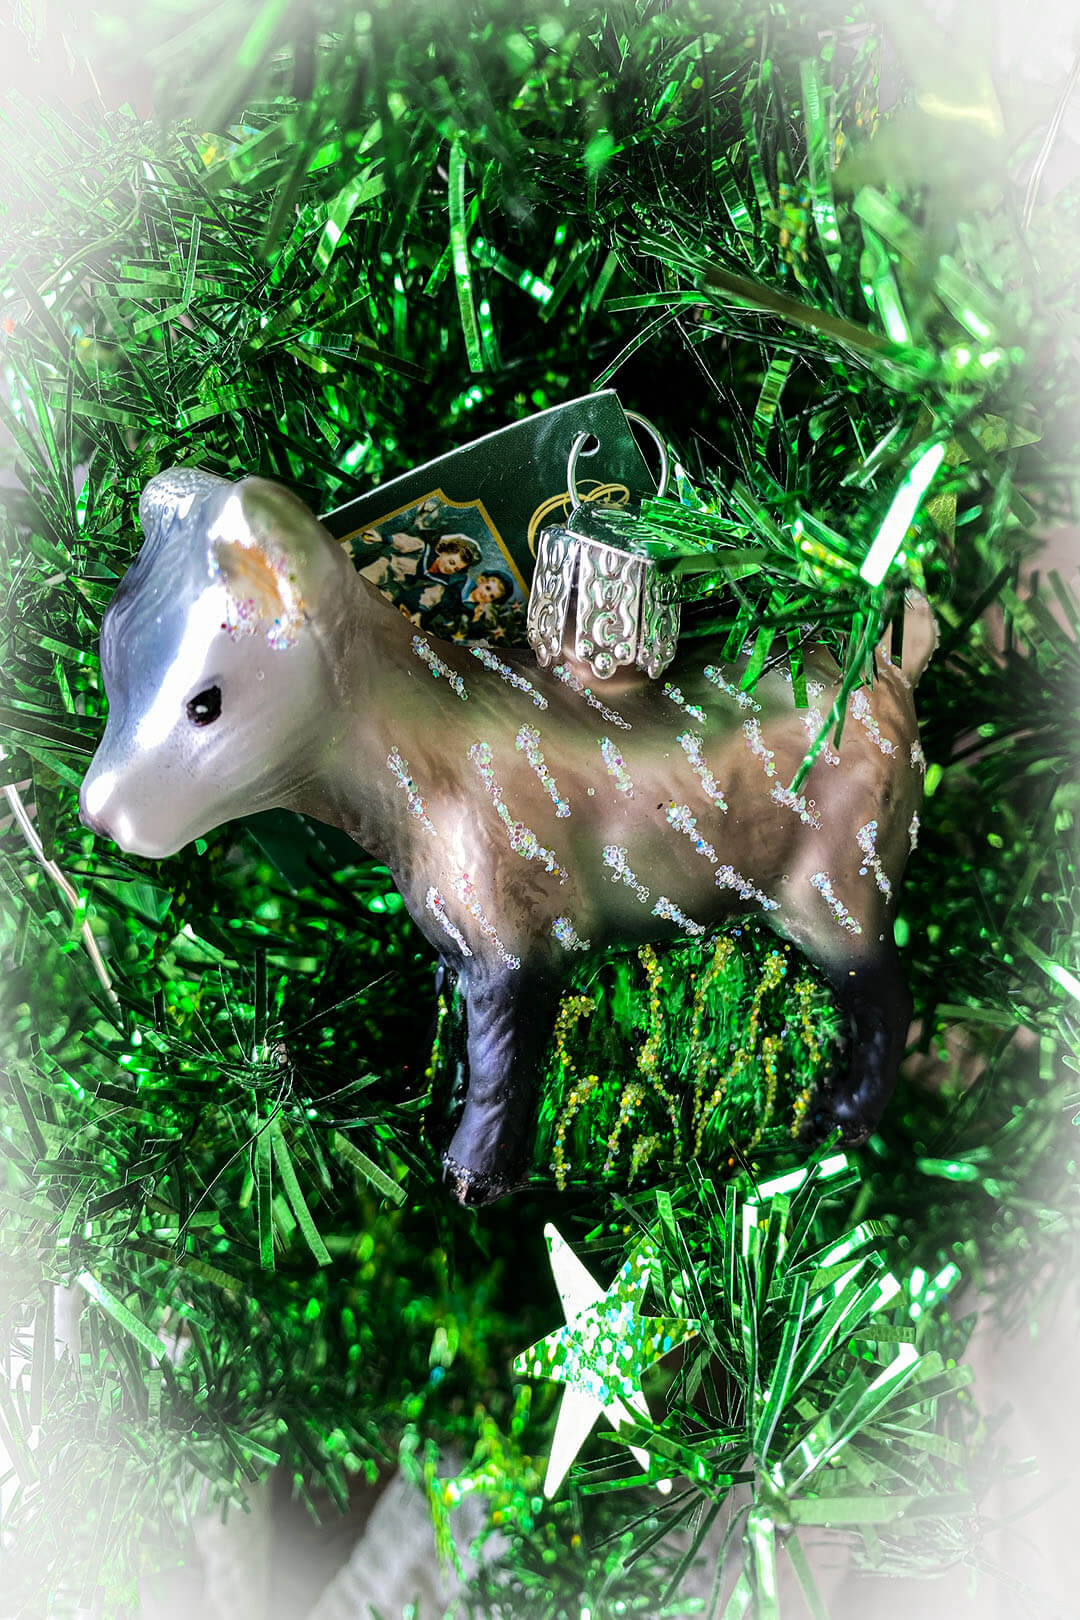 Pygmy Goat Ornament